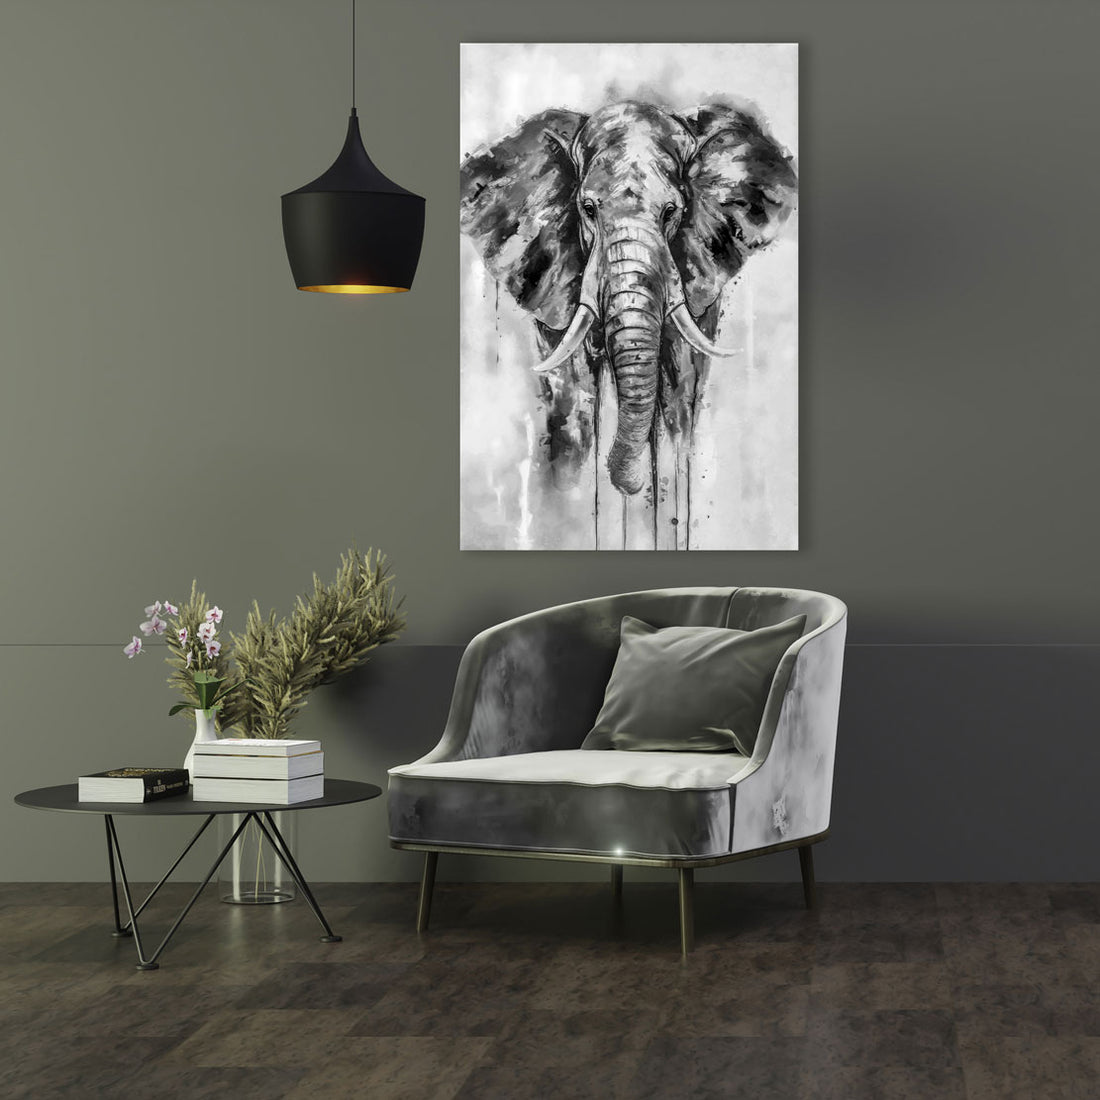 Wandbild Elefant abstrakt schwarz weiß